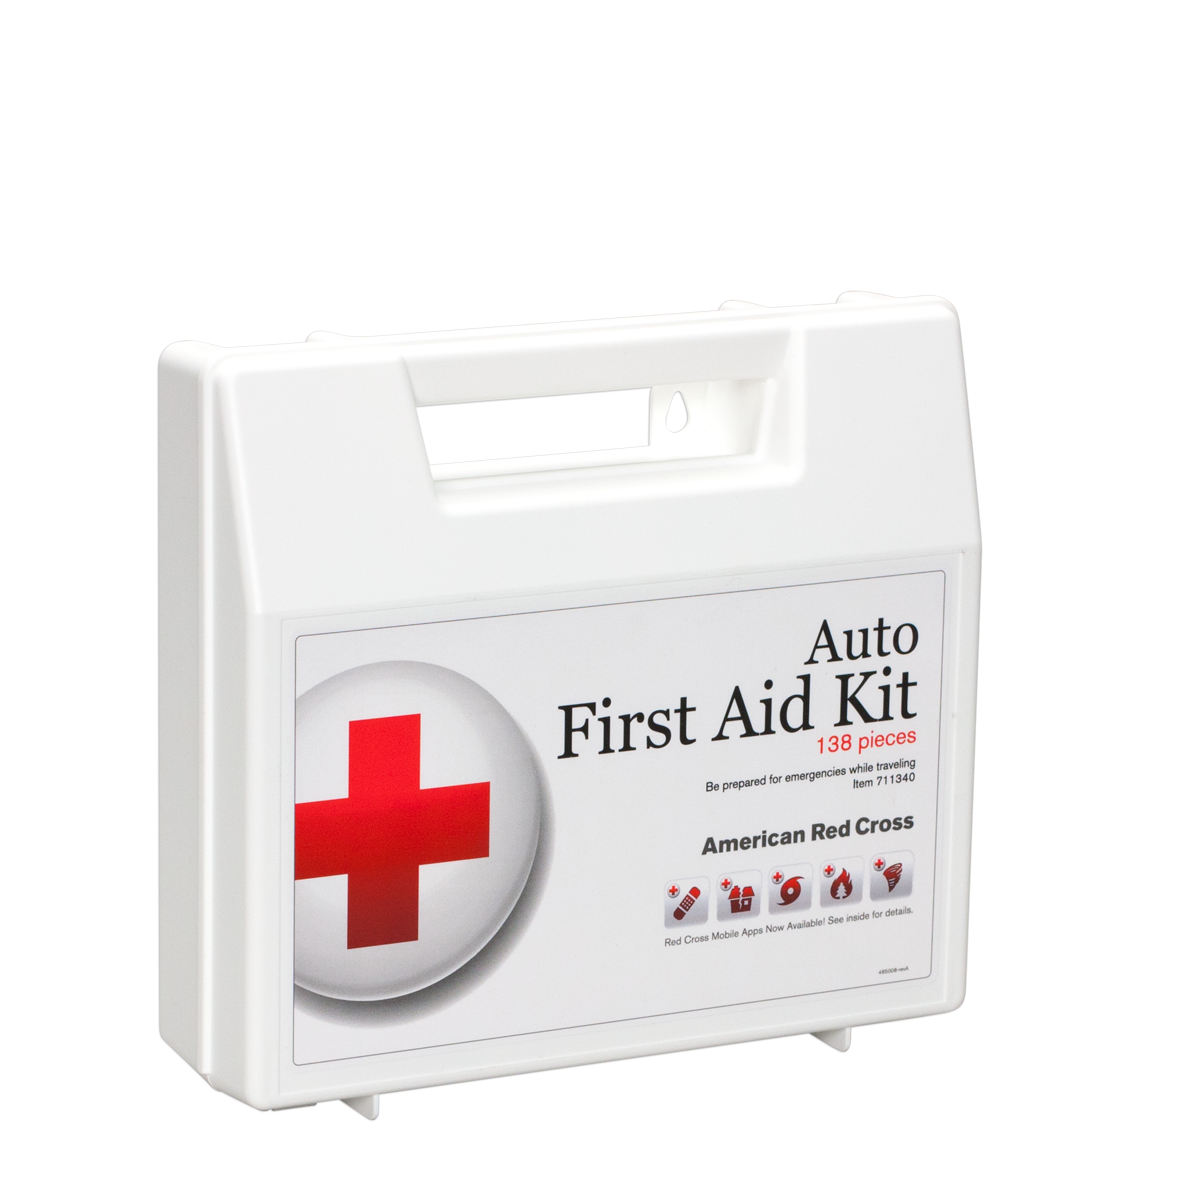 first aid box details